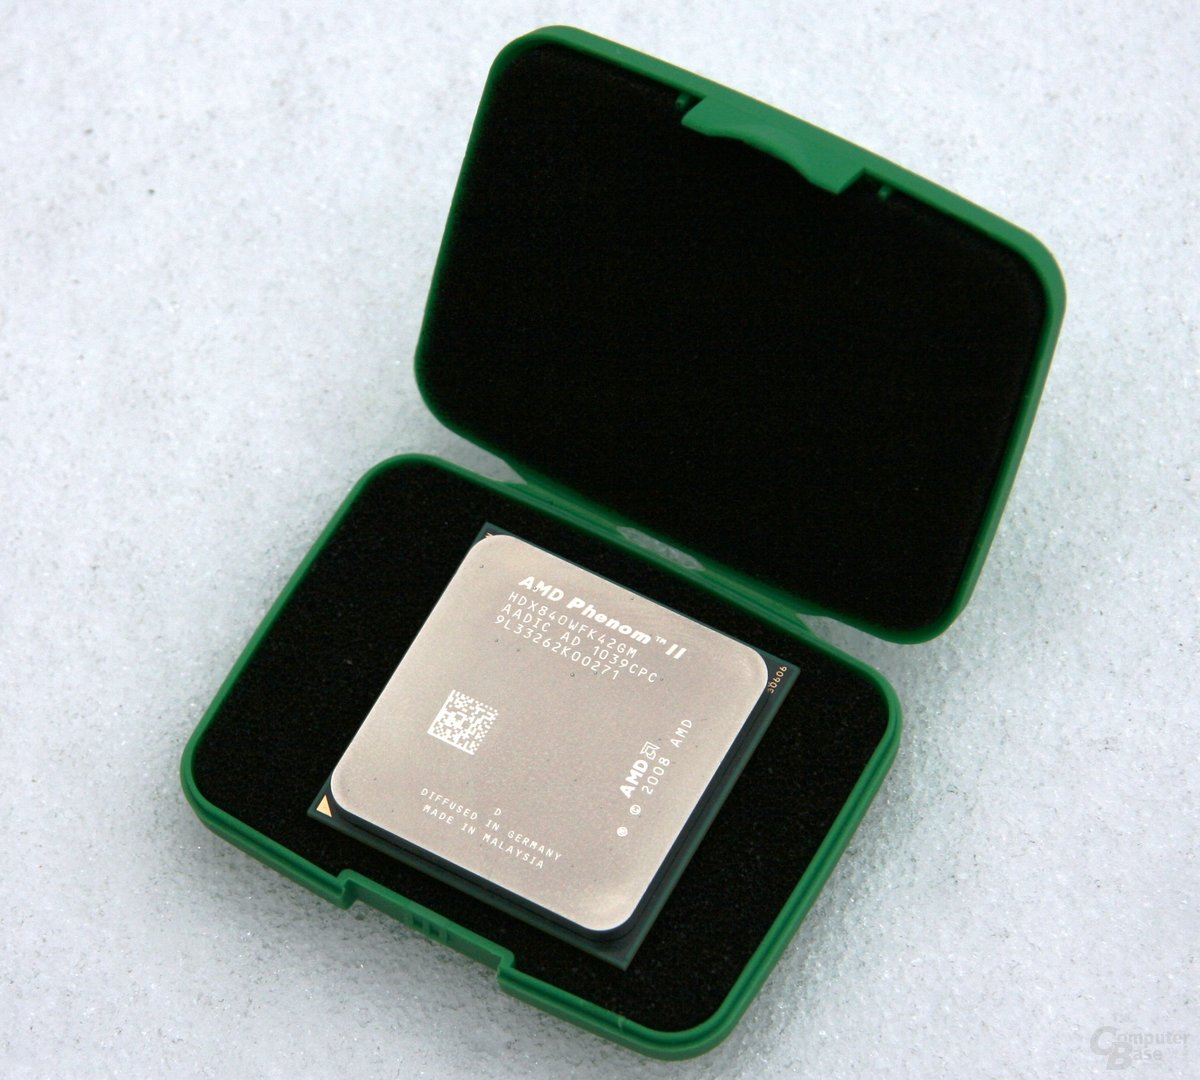 AMD Phenom II X4 840